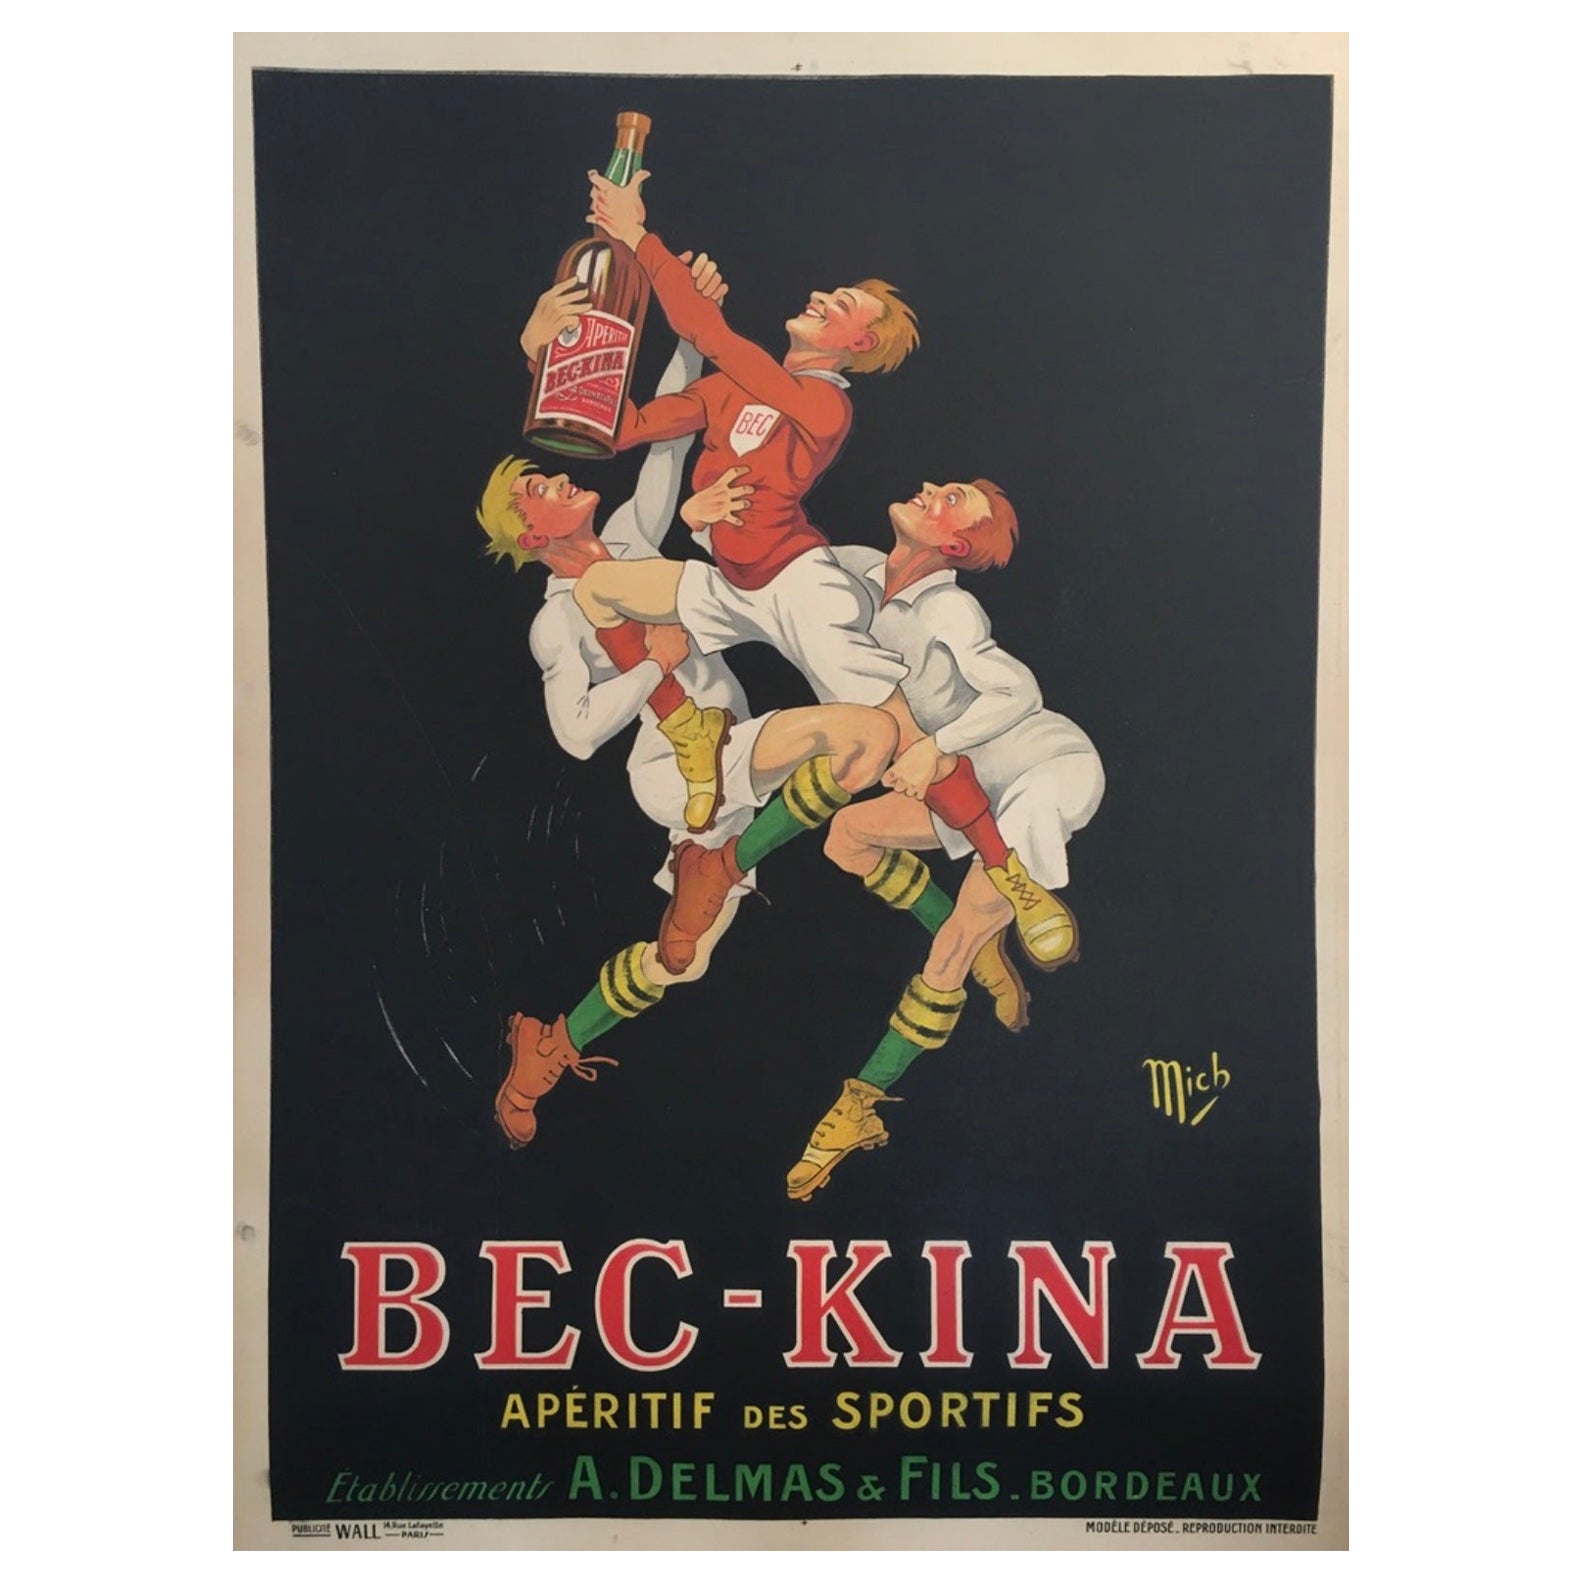 Original Vintage French Art Deco Poster, 'Bec Kina', Apéritif 1910 by Mich en vente